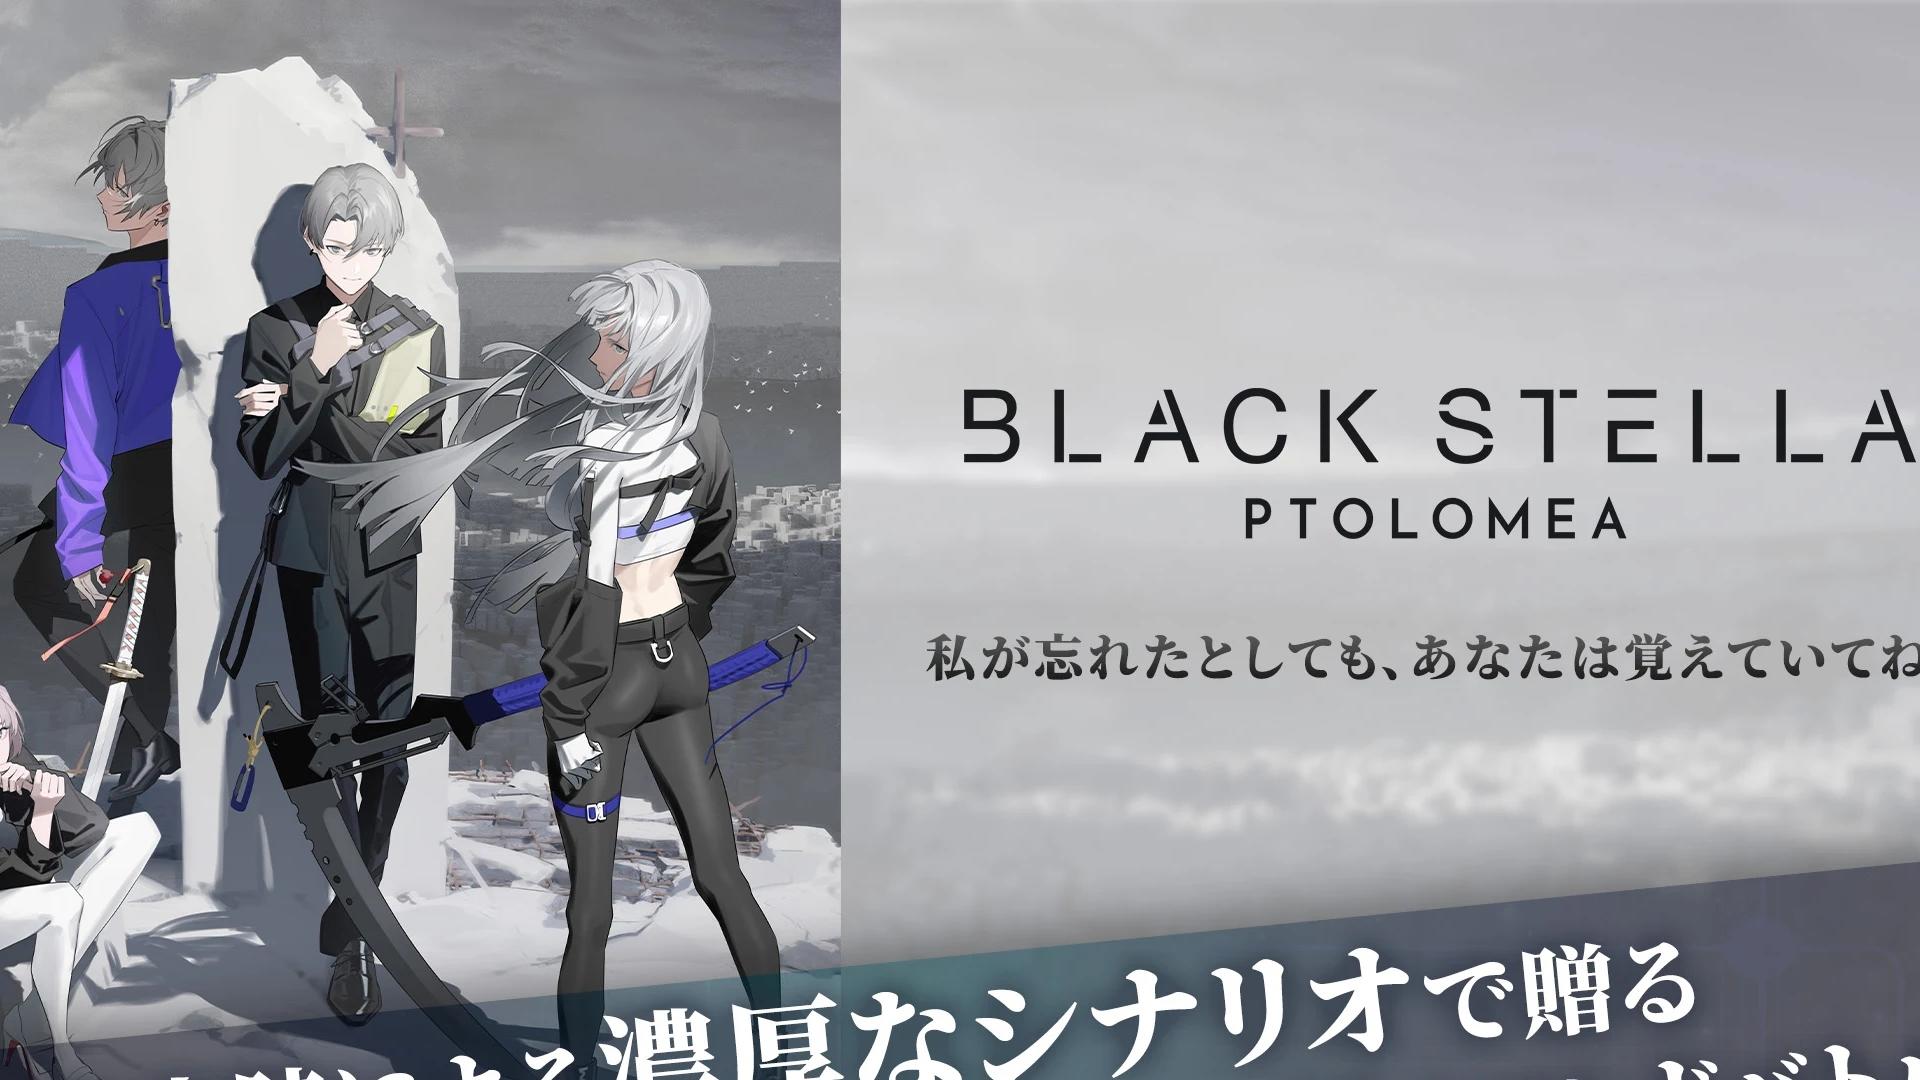 Banner of BLACK STELLA PTOLOMEA 